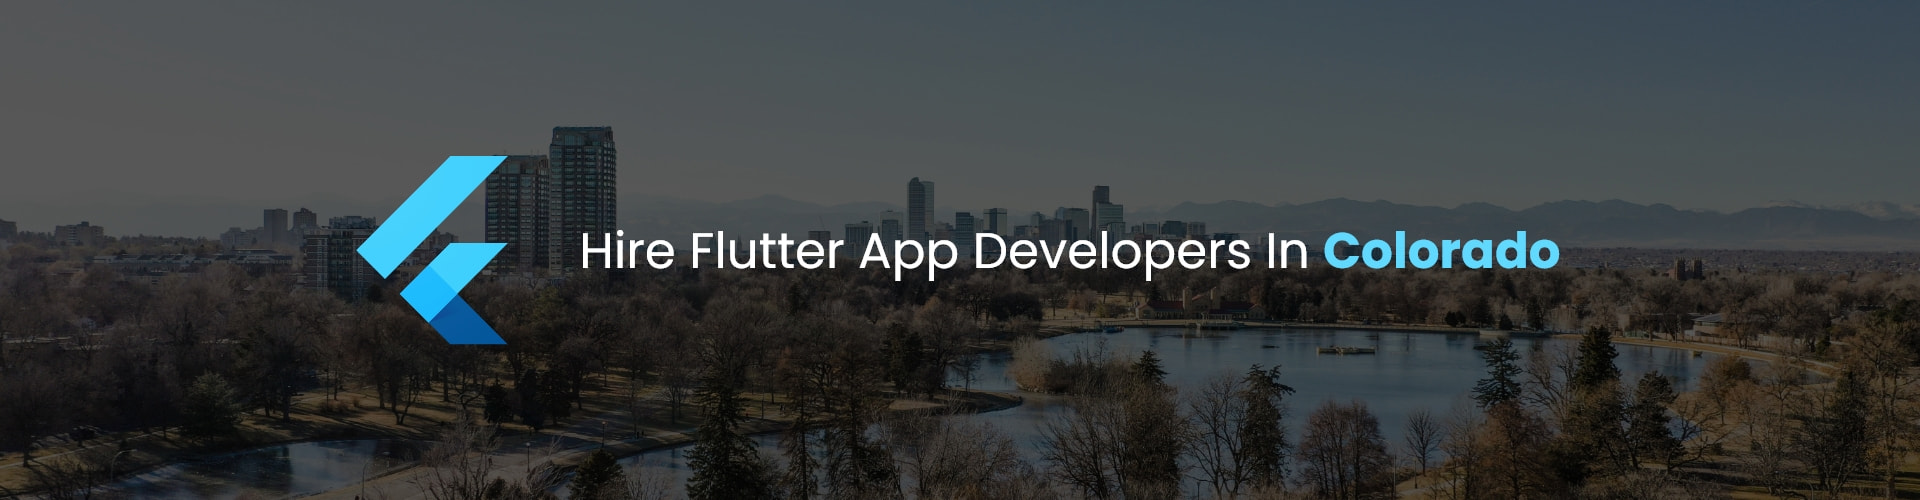 hire flutter app developers in colorado